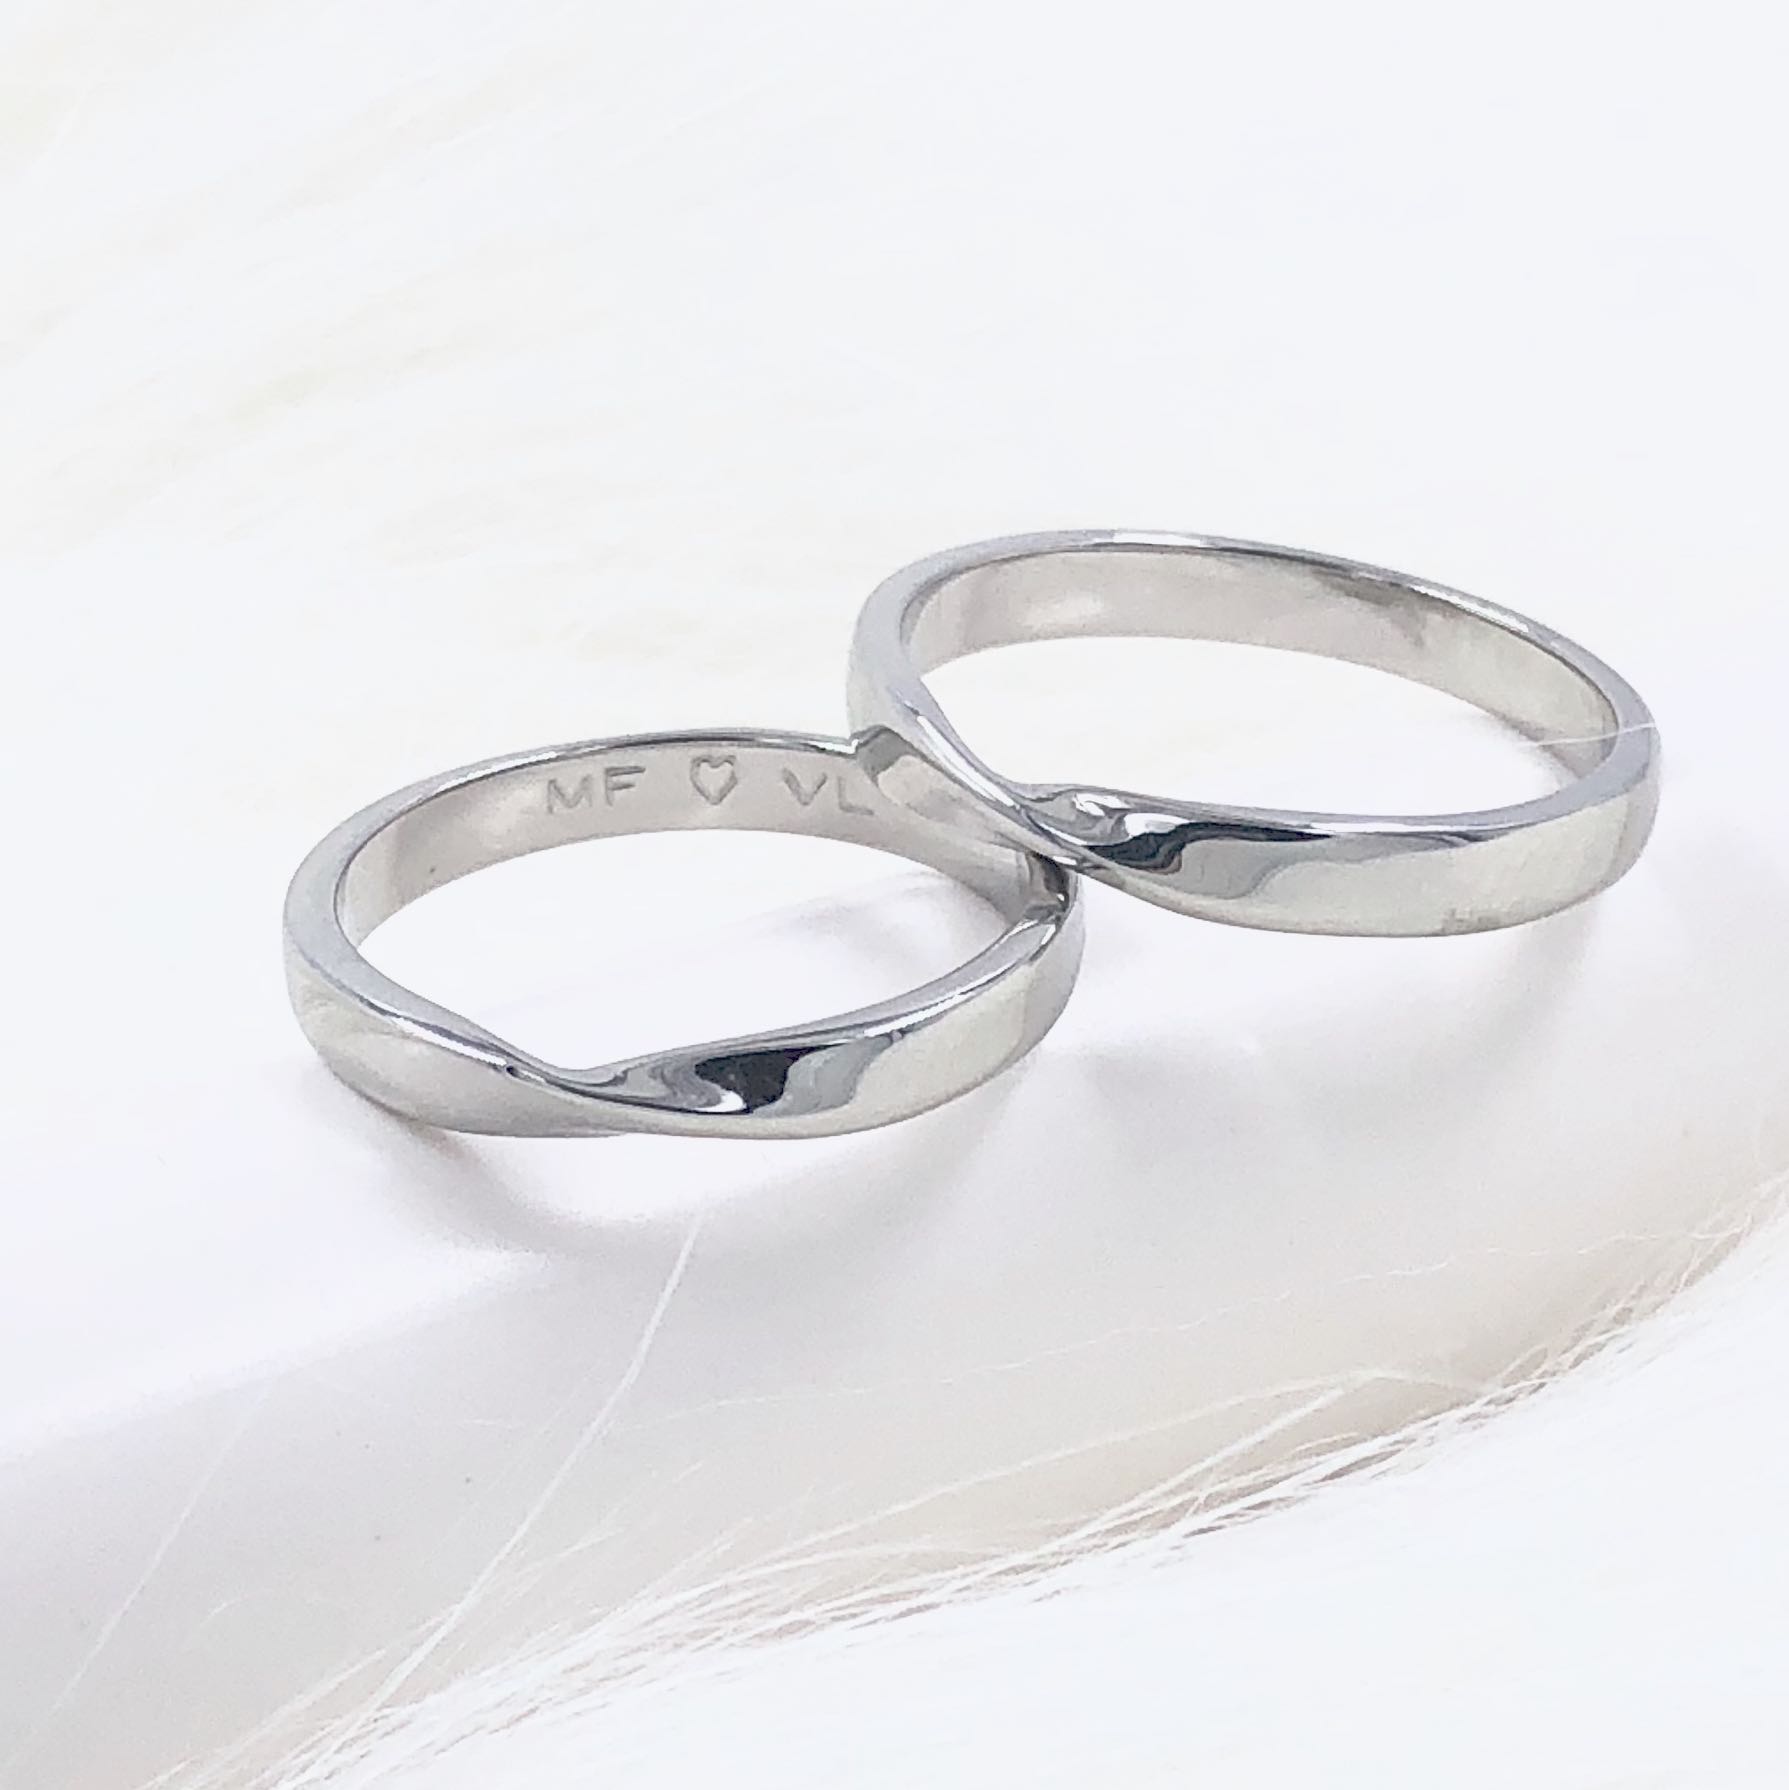 Jeulia Stylish Adjustable Sterling Silver Couple Rings - Jeulia Jewelry